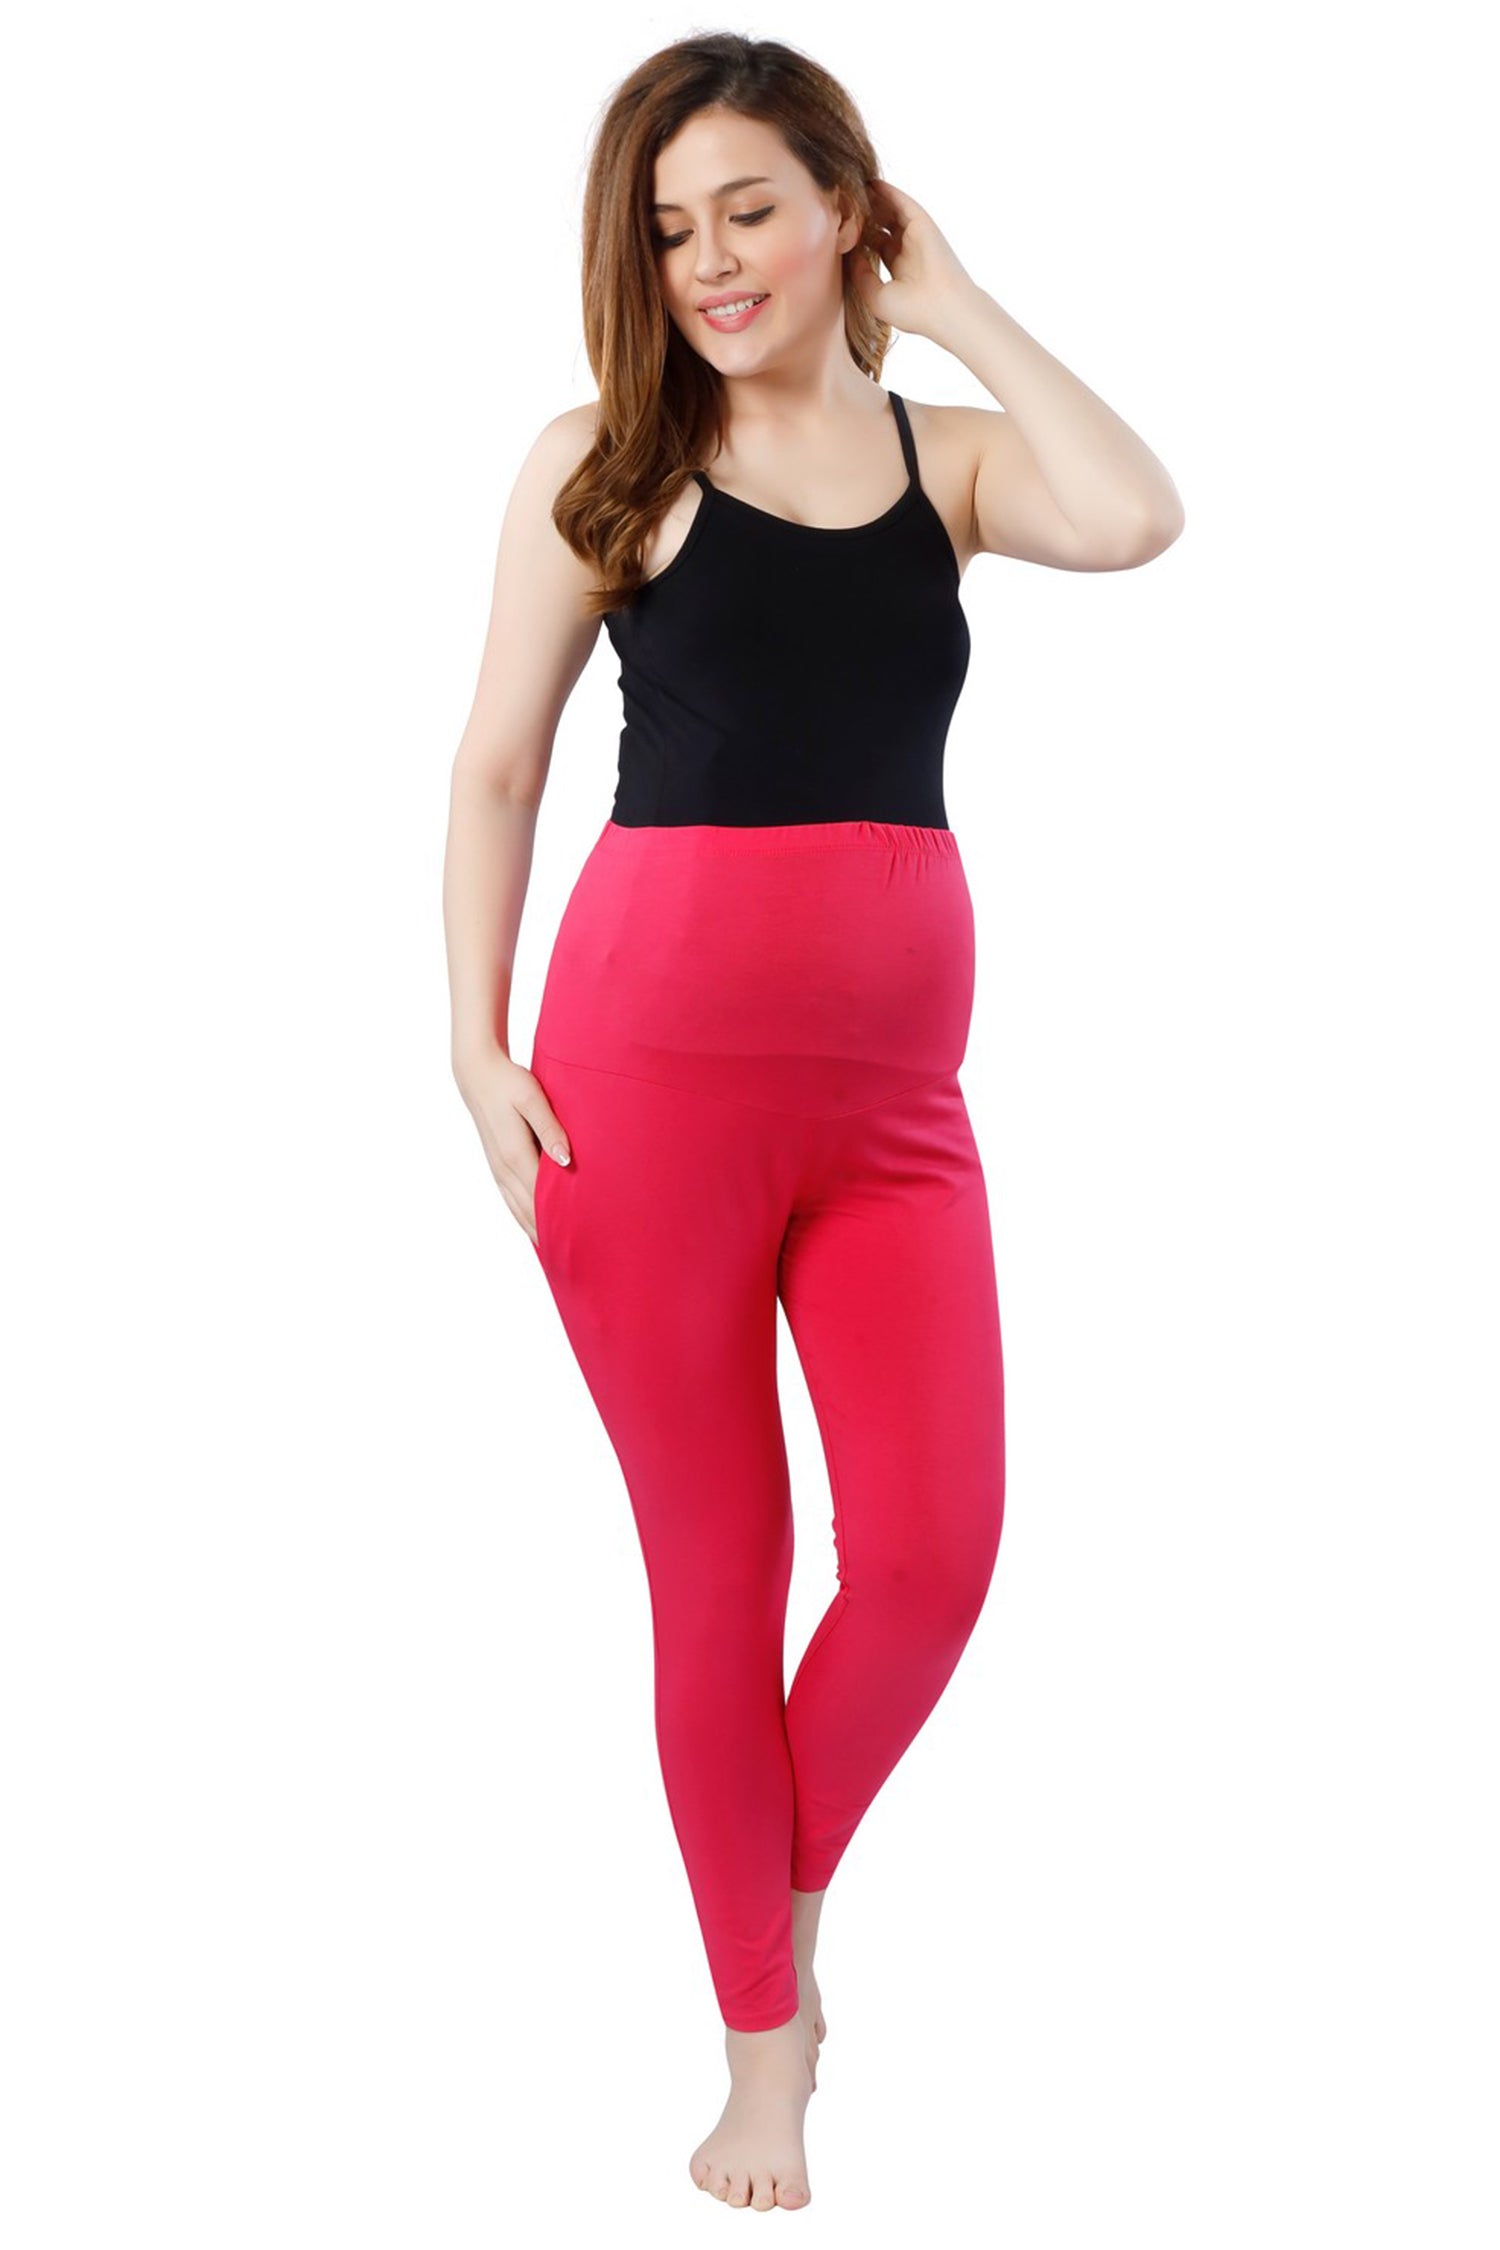 Buy Nite Flite Black Cotton Yoga Pants for Womens Online  Tata CLiQ